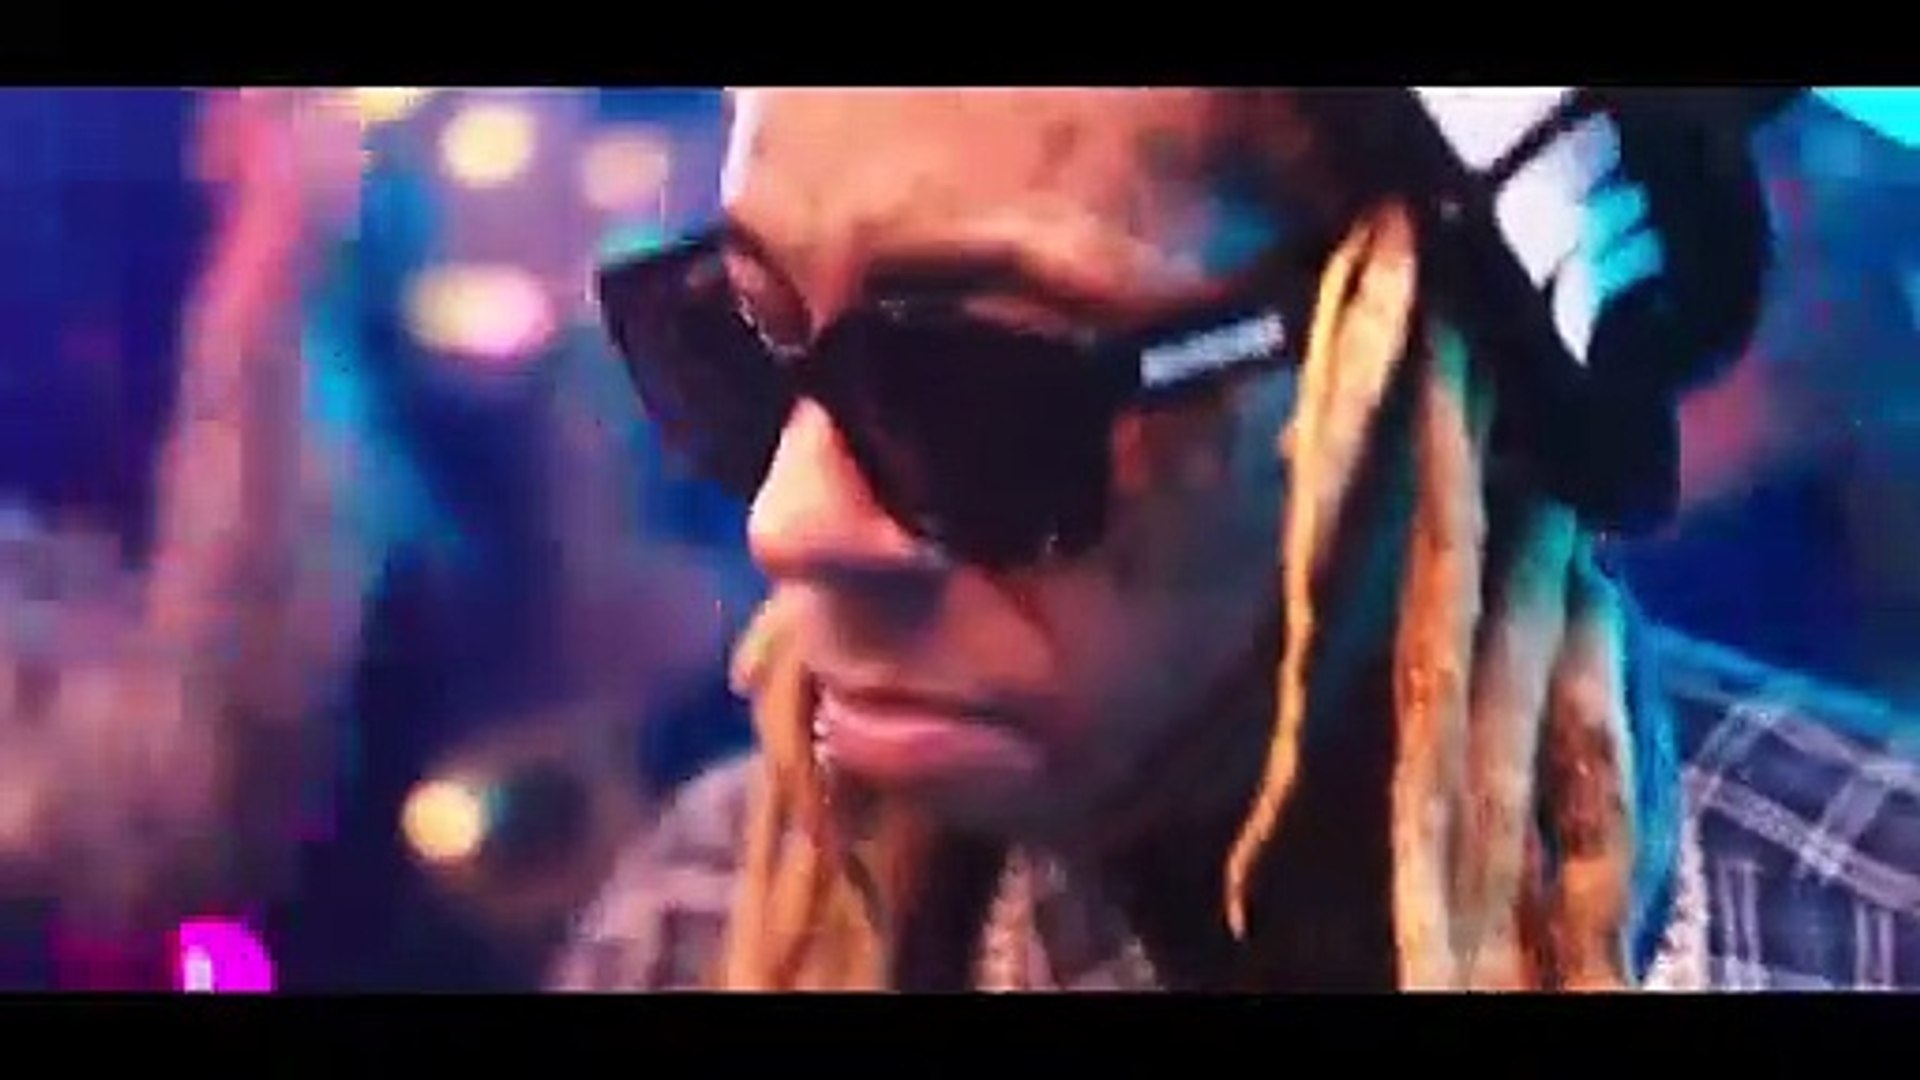 Lil Wayne ft. DaBaby, Lil Baby - Diamonds